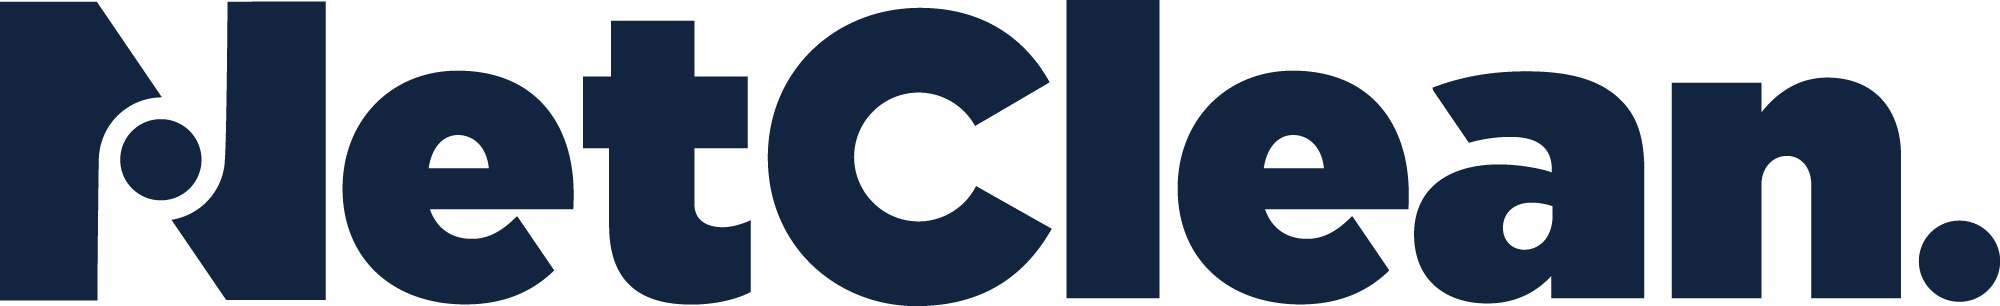 NetClean logo